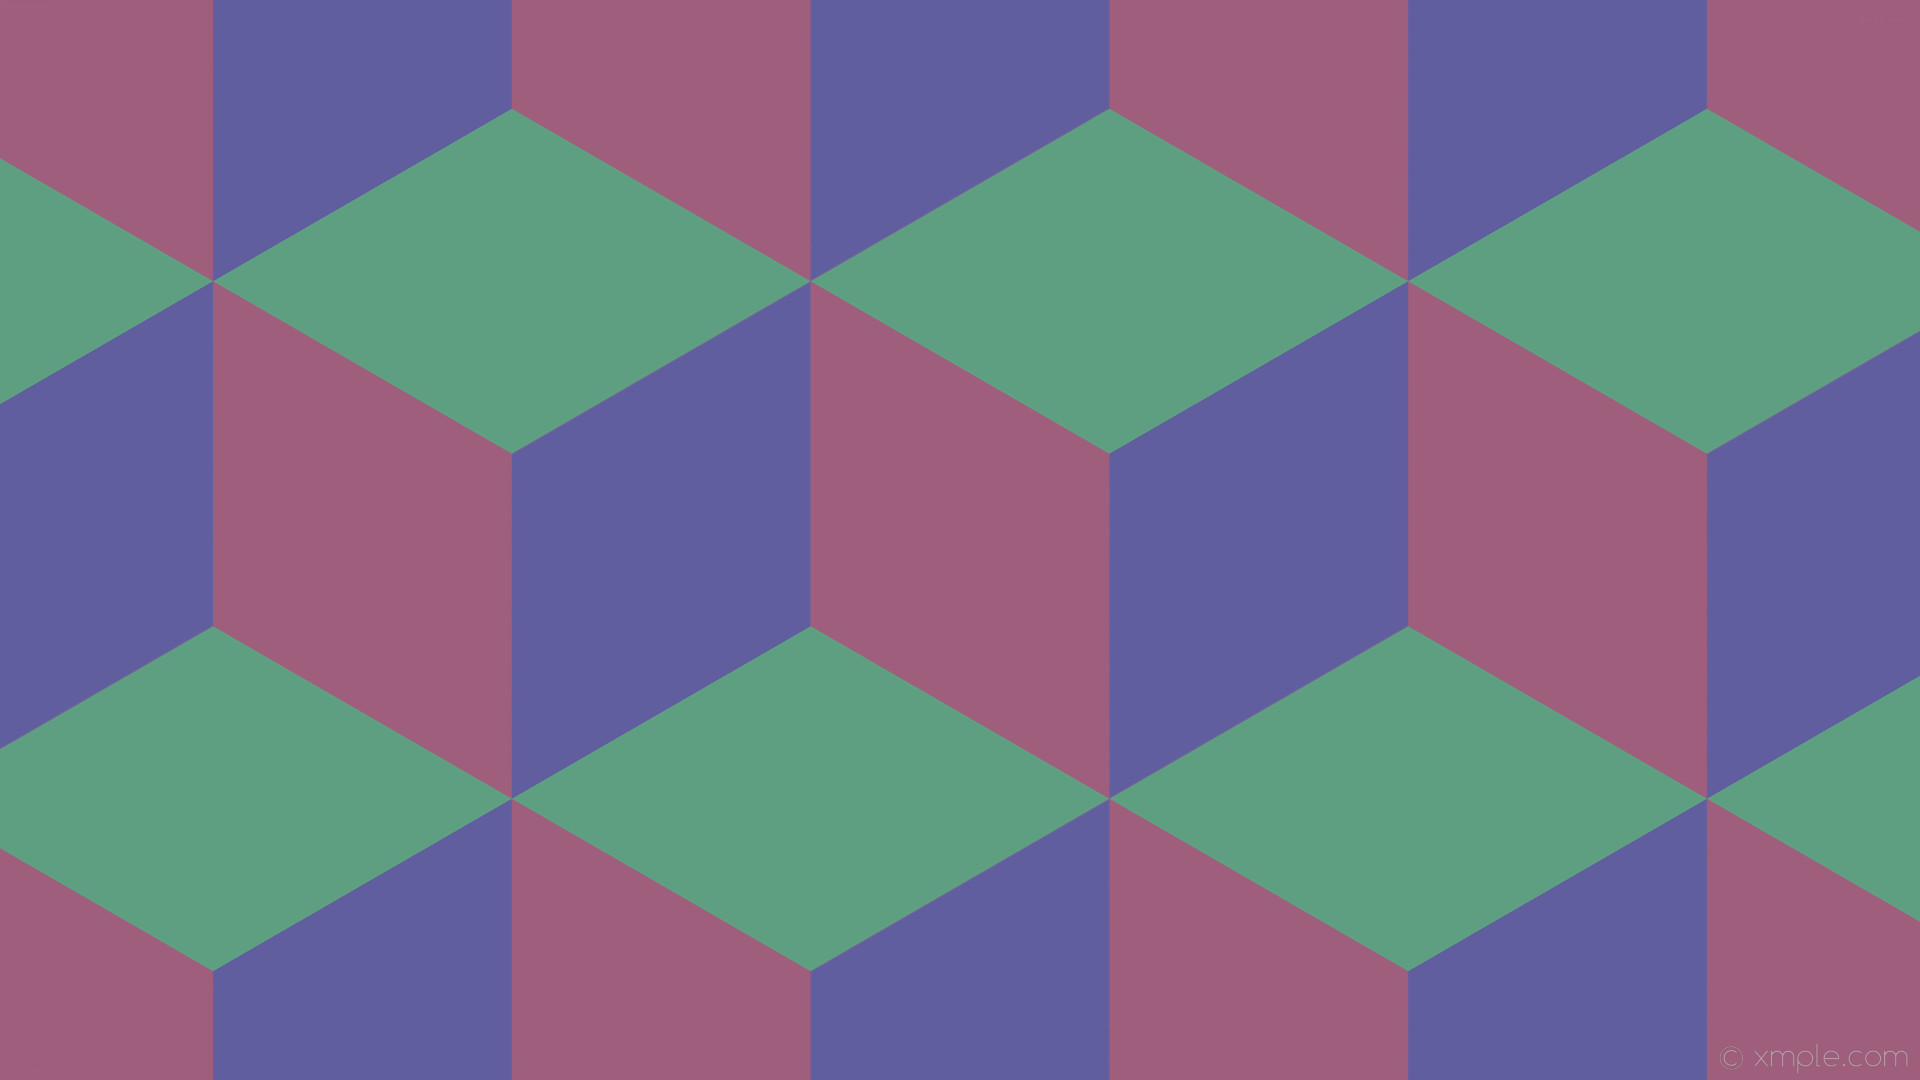 1920x1080 Wallpaper 3d Cubes Pink Turquoise Blue 9f5e7c 615e9f